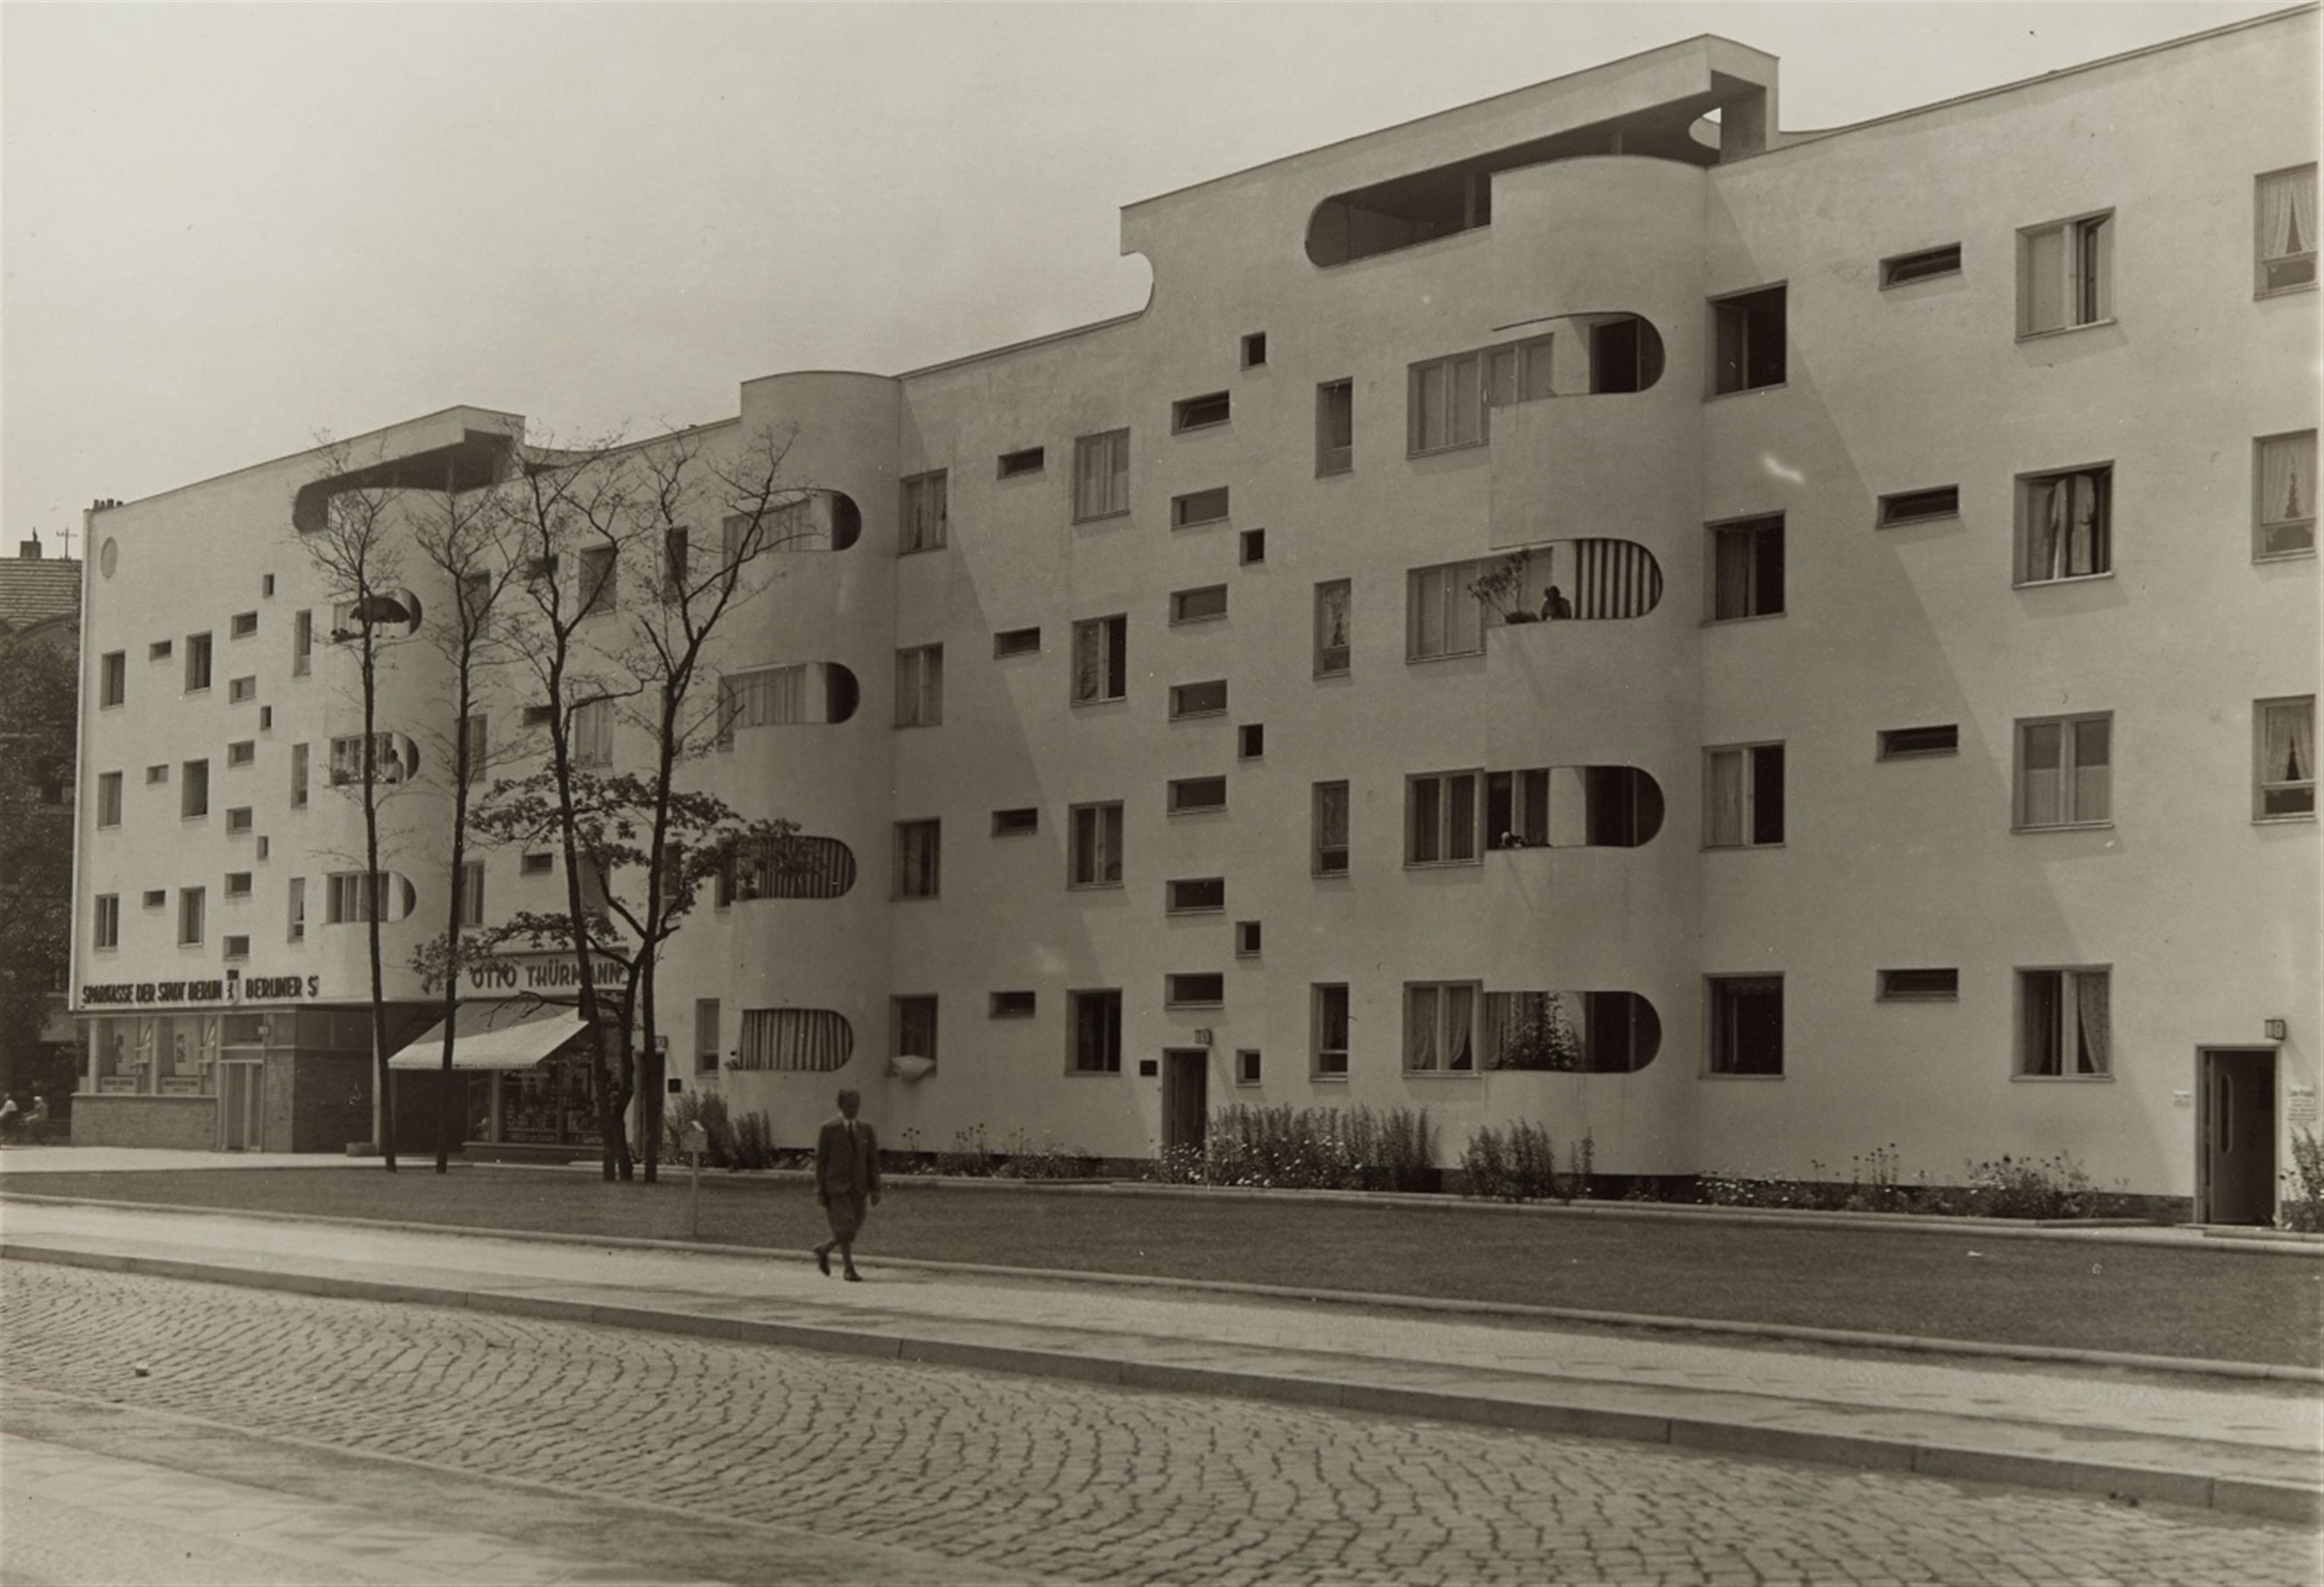 Paul W. John - Wohnblock in der Siedlung Siemensstadt, Berlin - image-1